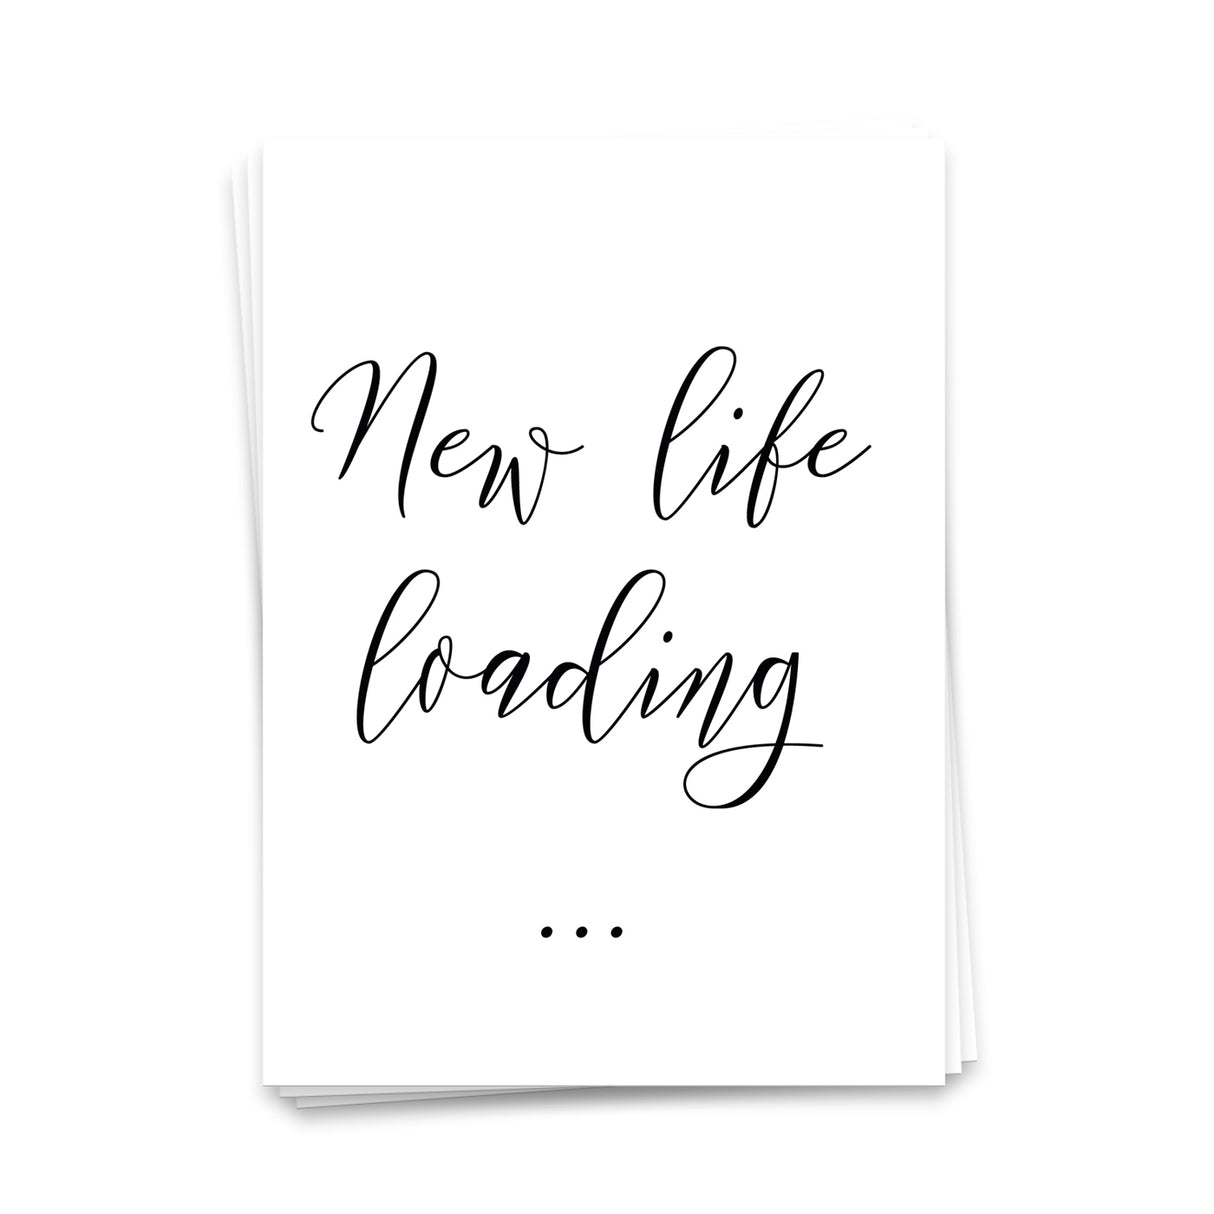 New life loading - Postkarte